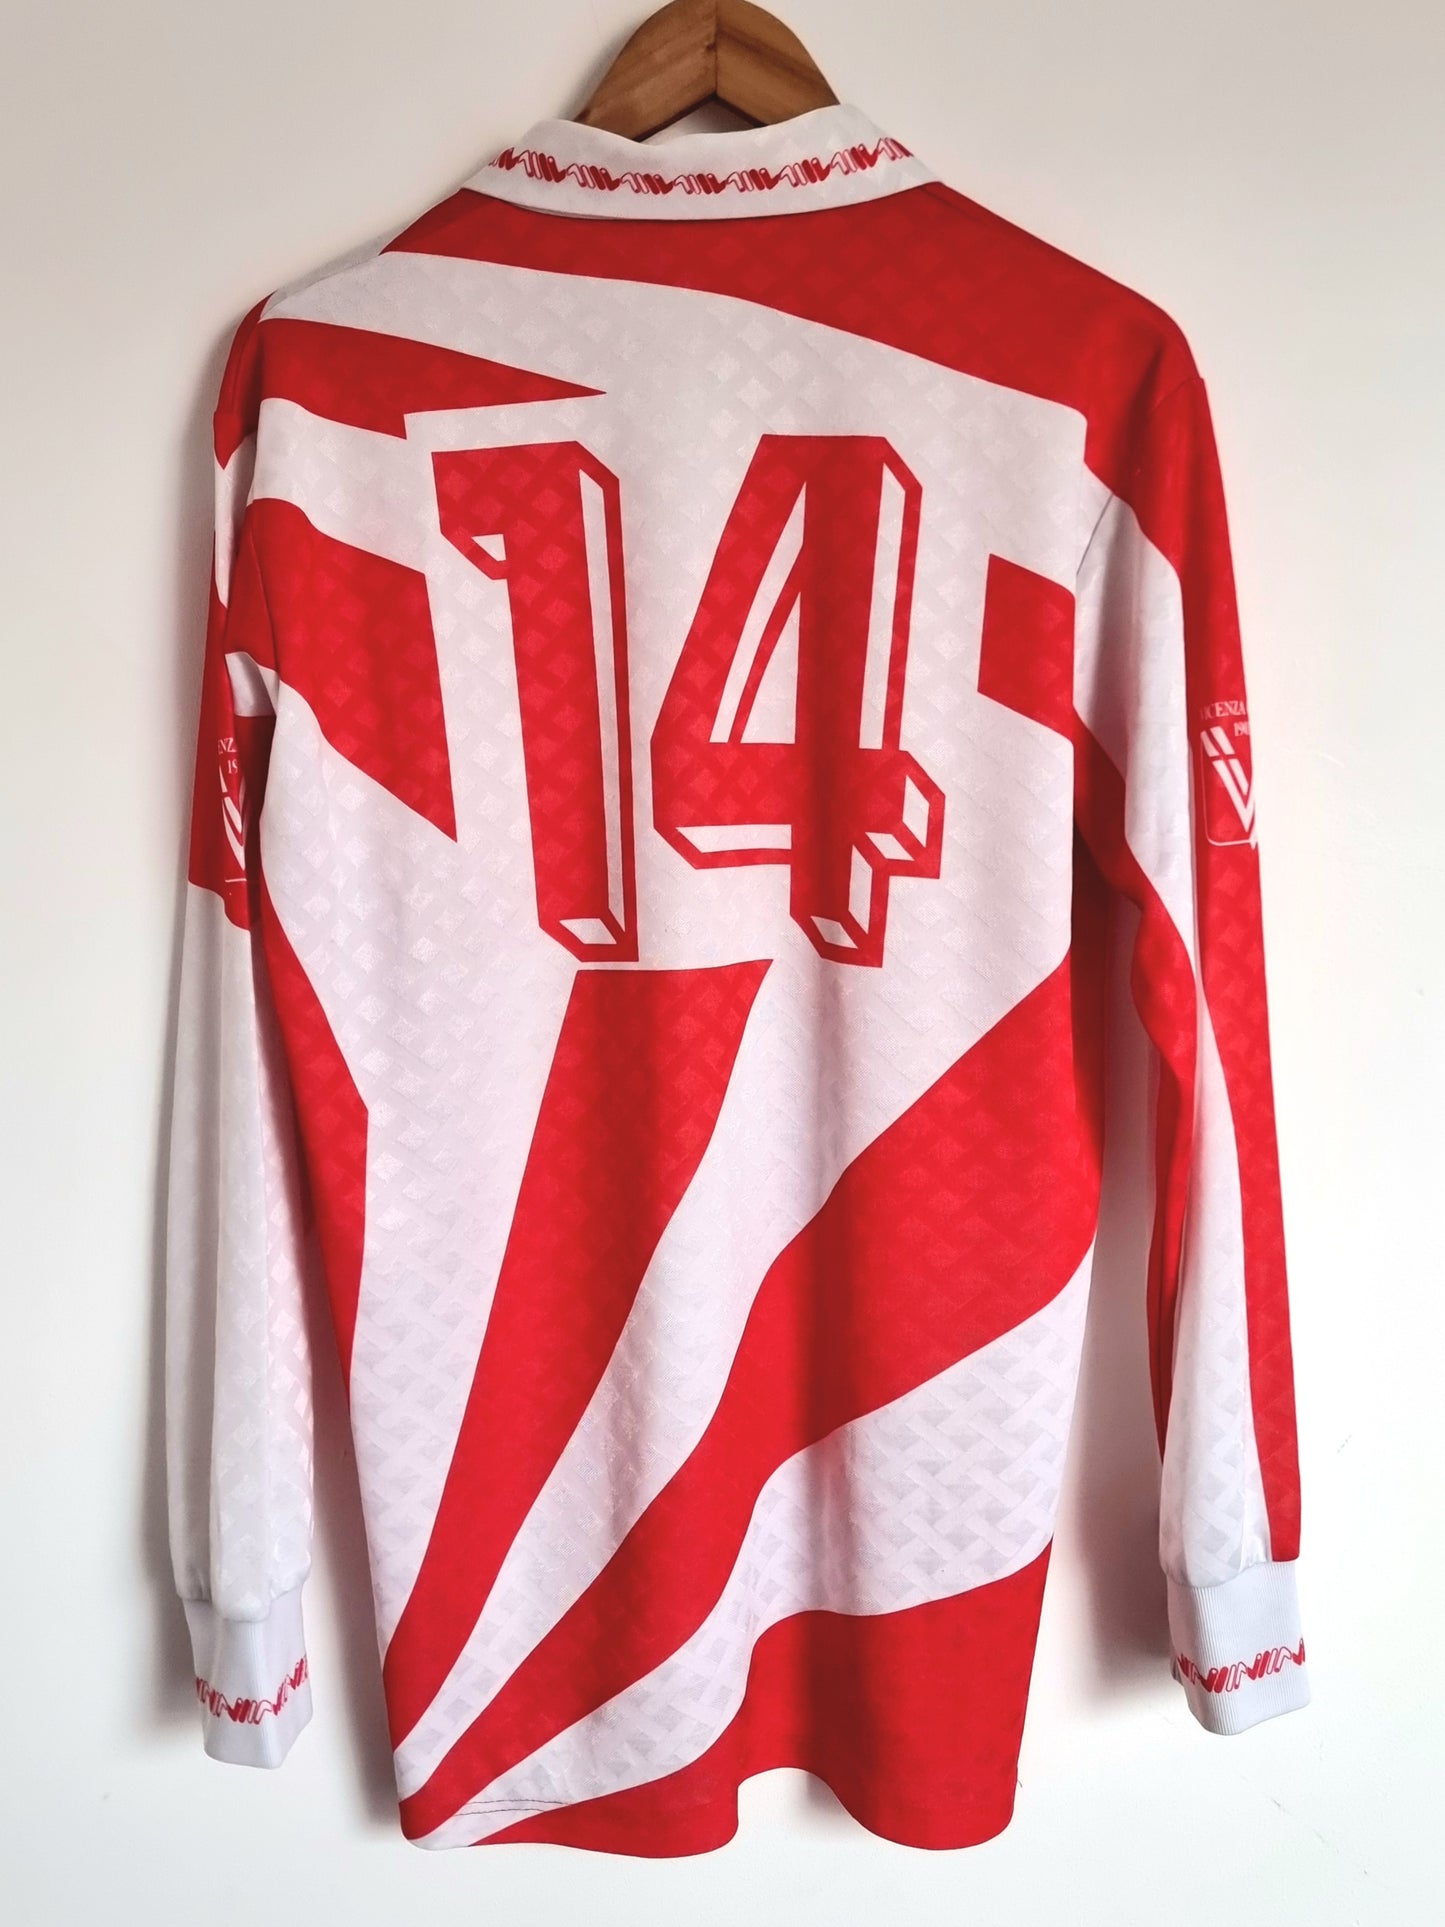 Virma Vicenza 92/93 Match Issue Long Sleeve Alternate Shirt XL